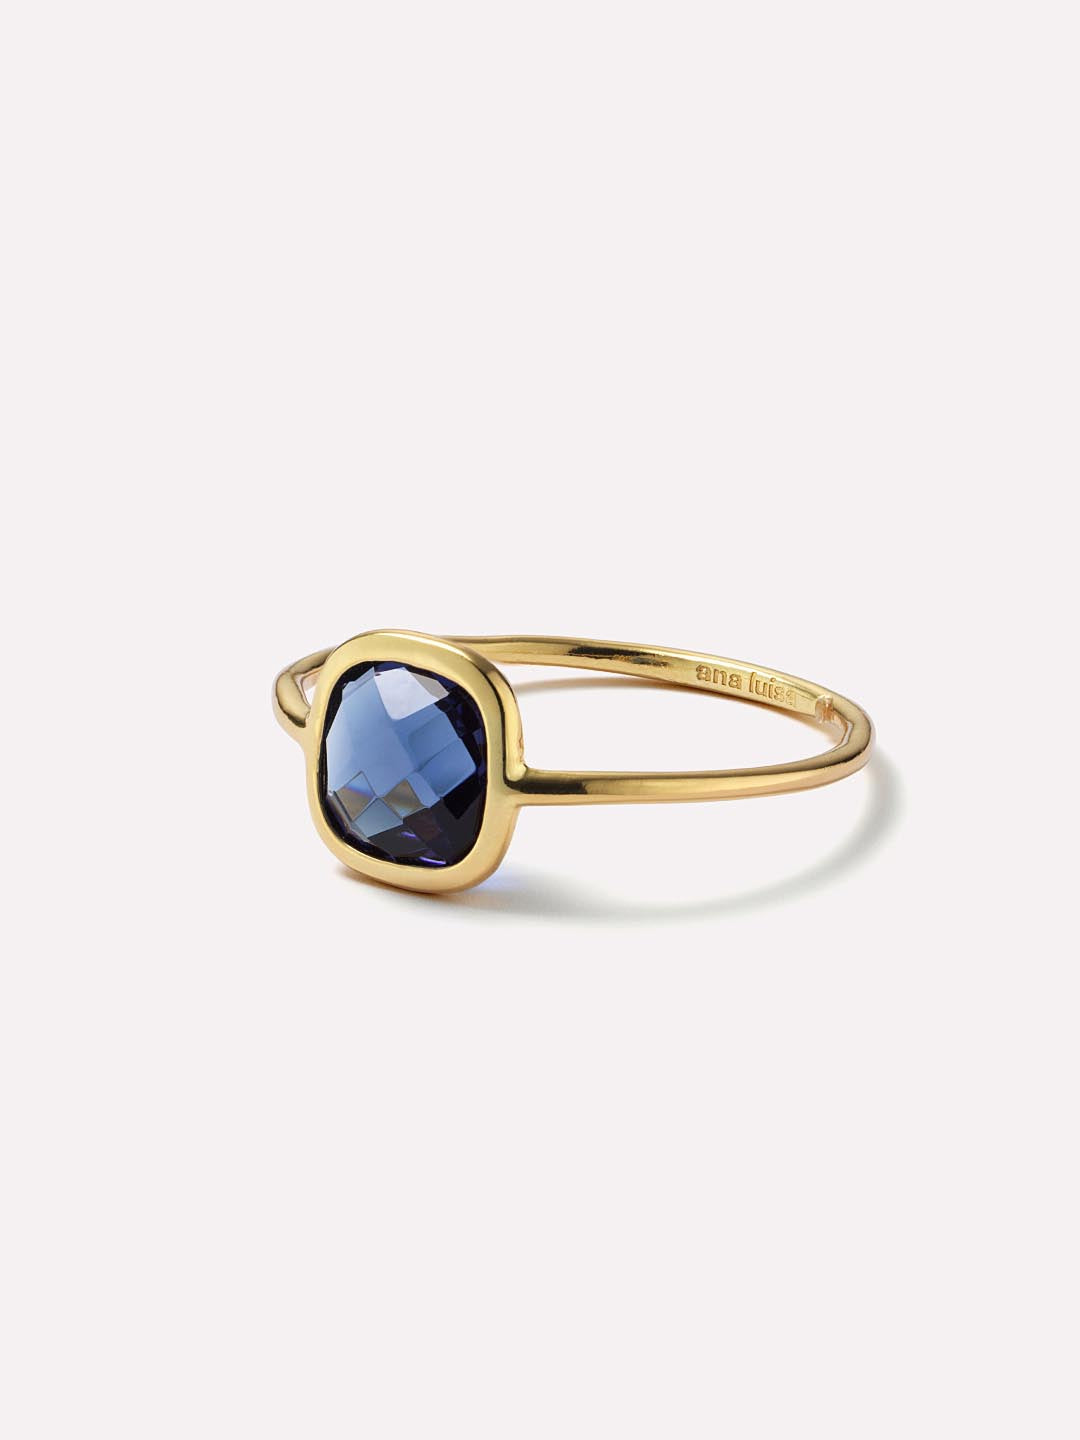 Ana Luisa Jewelry Rings Thin Bands Stone Ring Mae Ring Dark Blue Gold